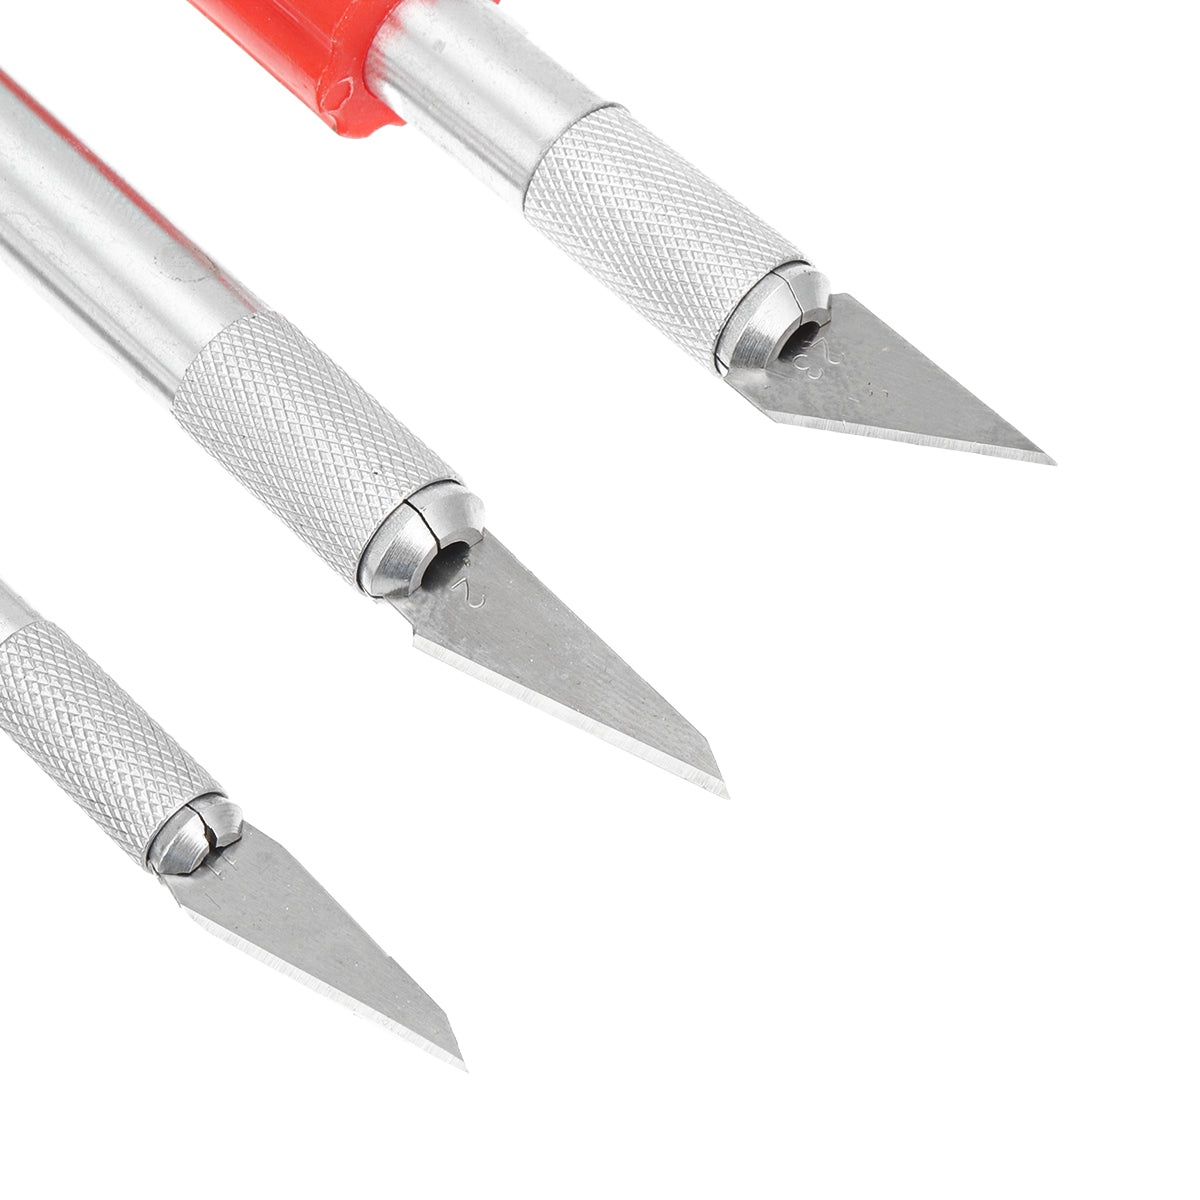 13Pcs/Set Craft Knife Pen Engraving Carving Blade Wood Cutter Repair Hand